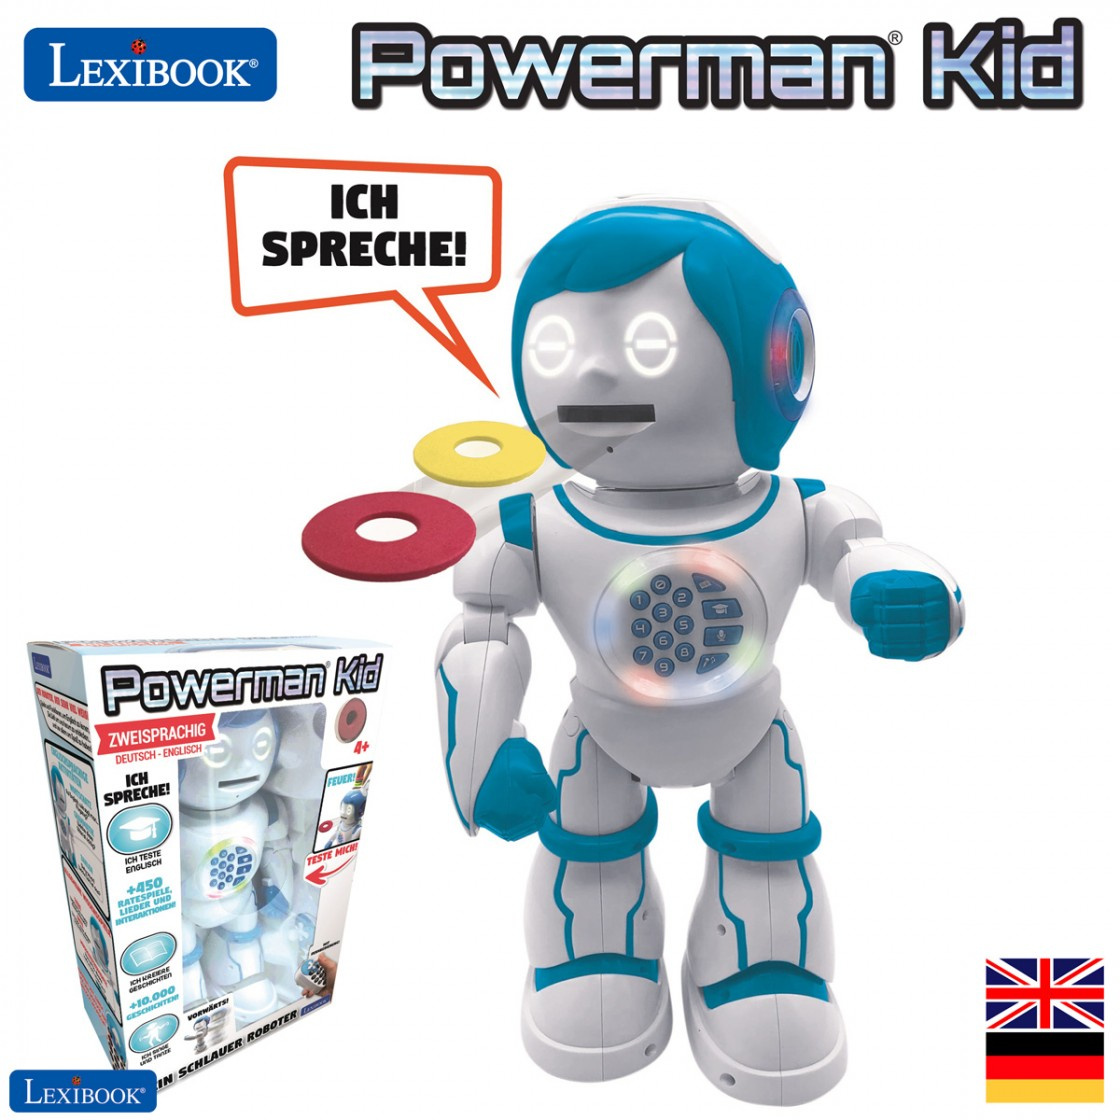 Powerman kid robot